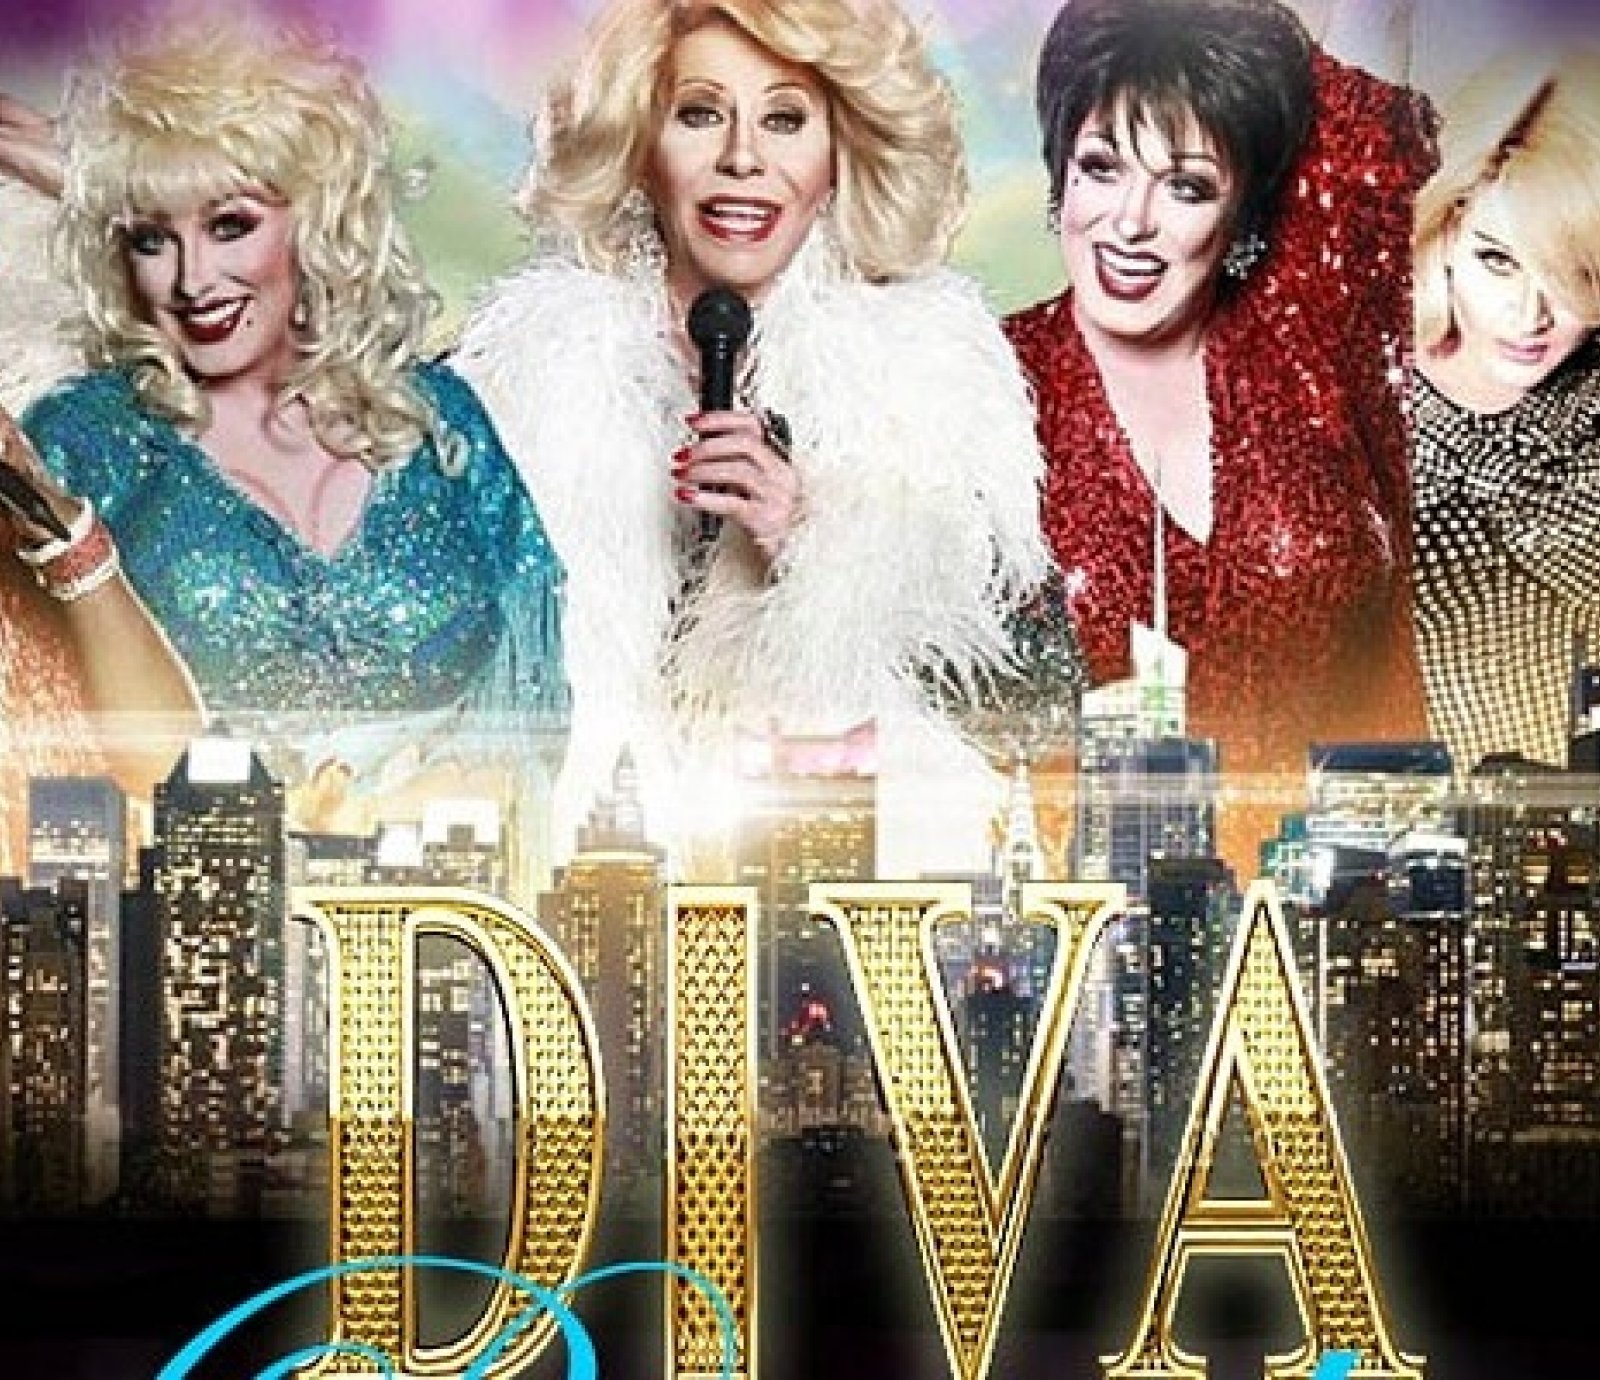 Diva Royale Drag Queen Show - Philadelphia